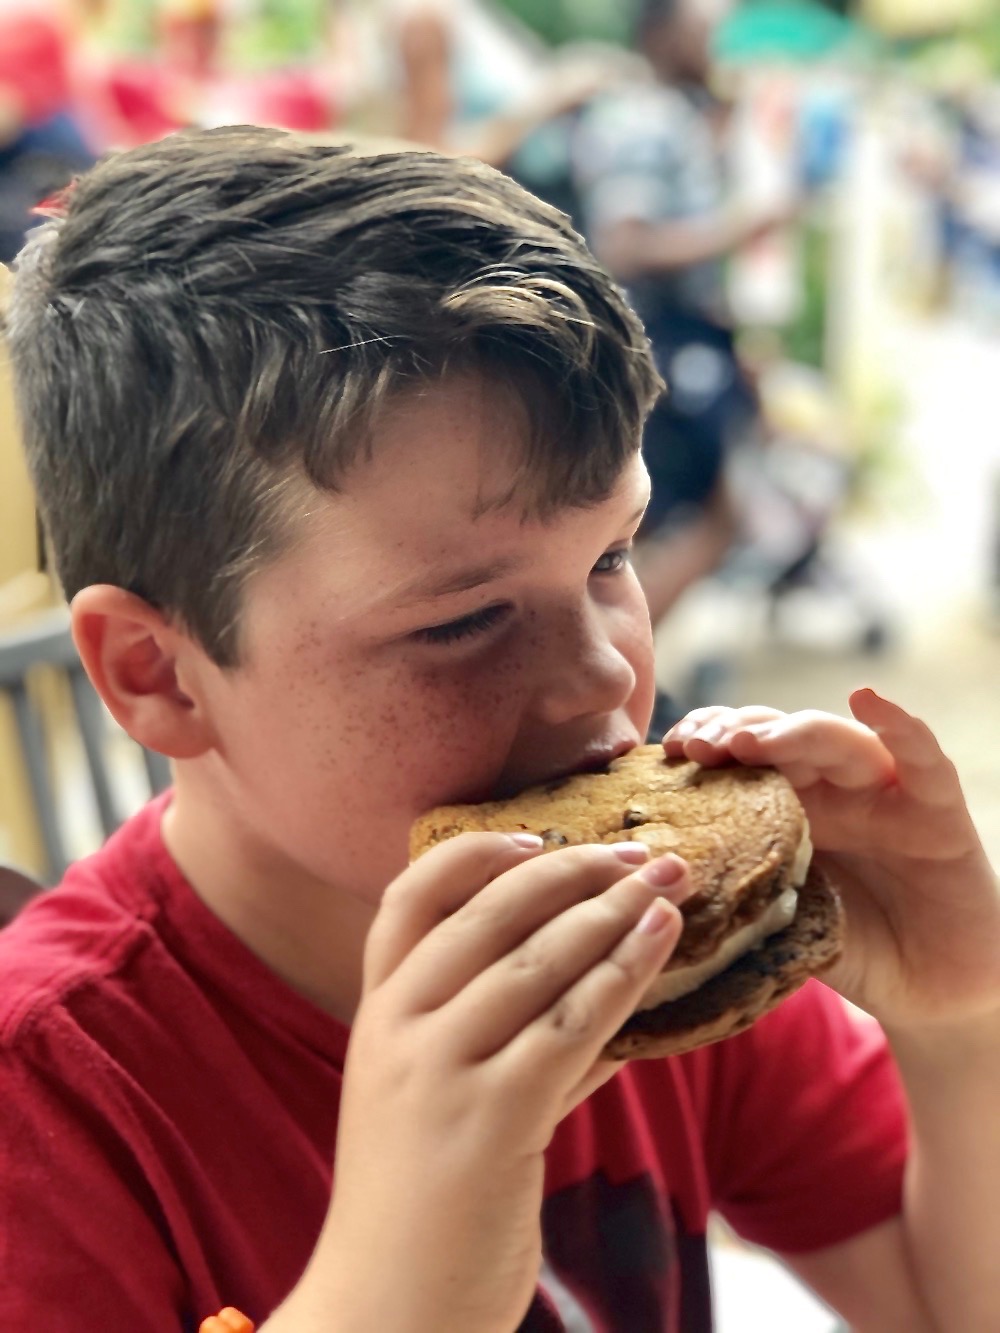 Giant Ice Cream Cookie Sandwich found at Dino-Bites in Animal Kingdom